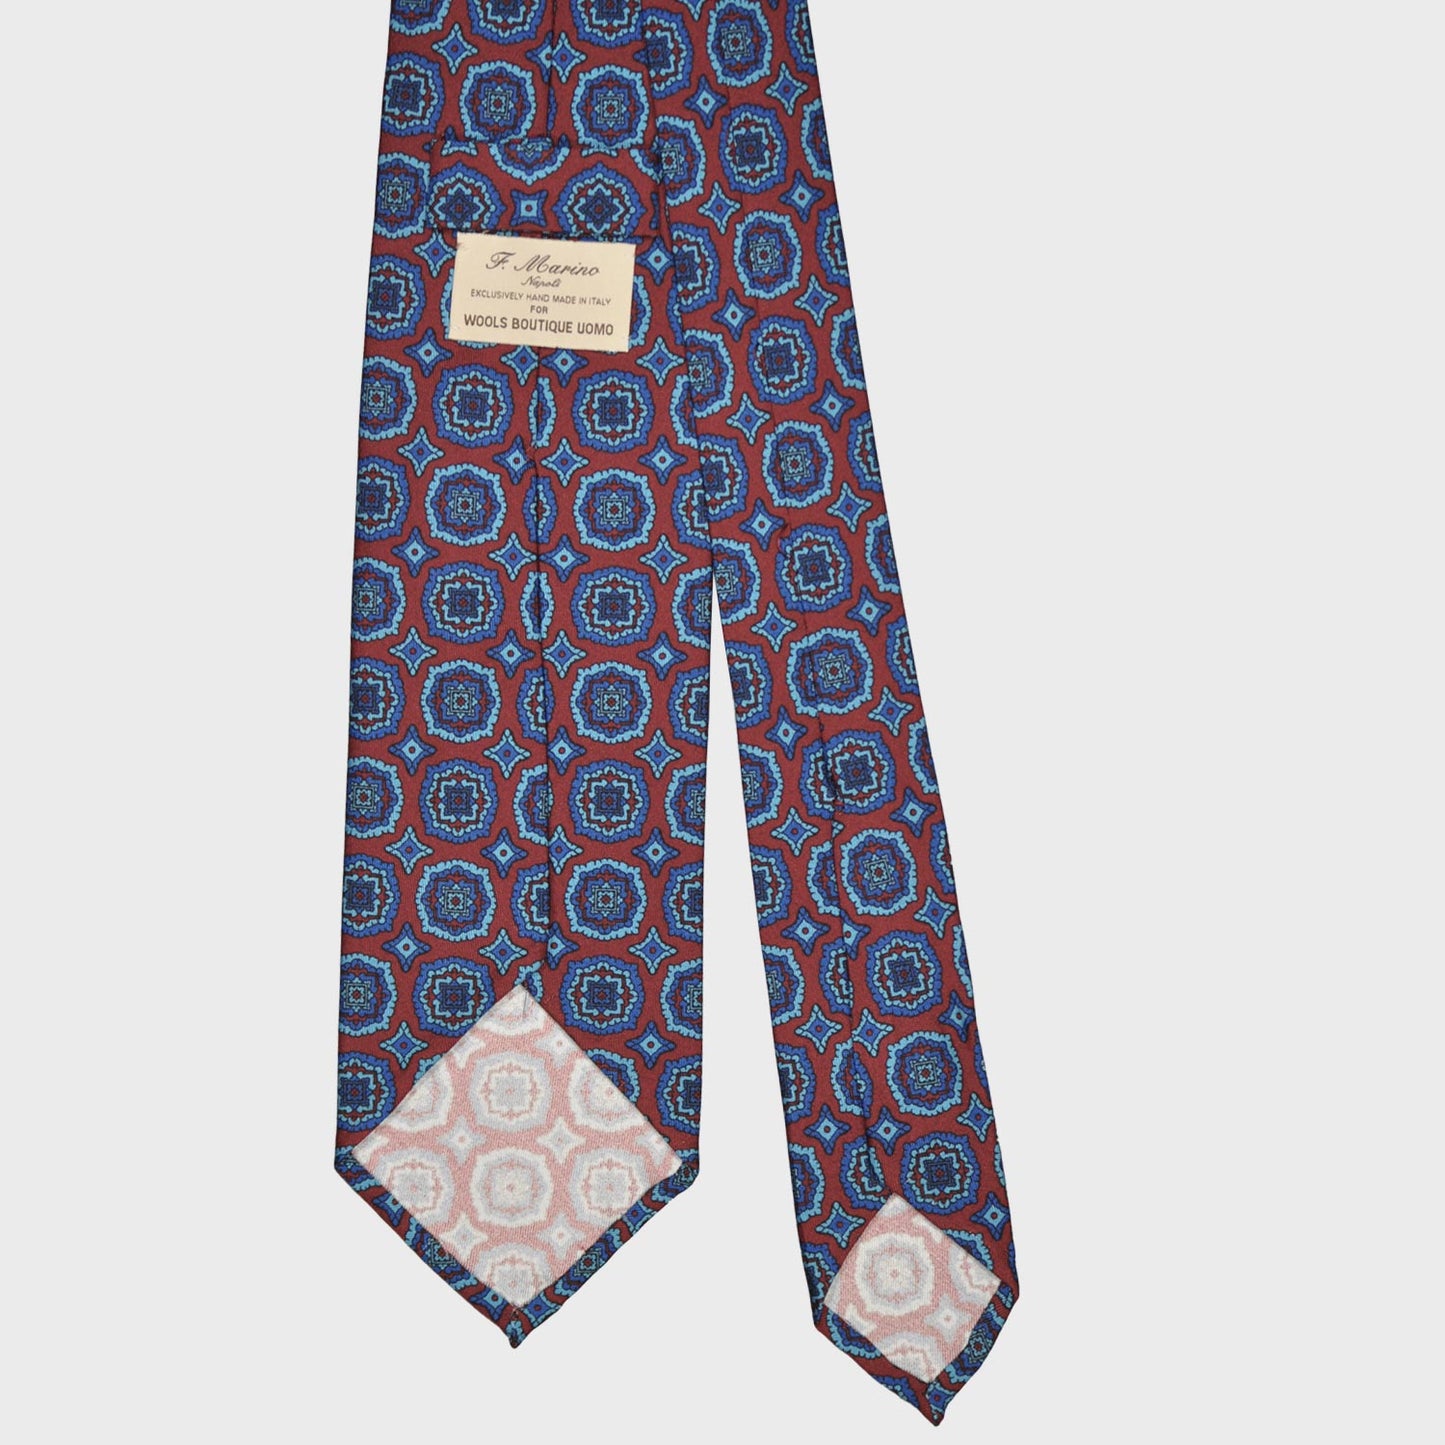 F.Marino Silk Tie 3 Folds Medallions Burgundy Red-Wools Boutique Uomo